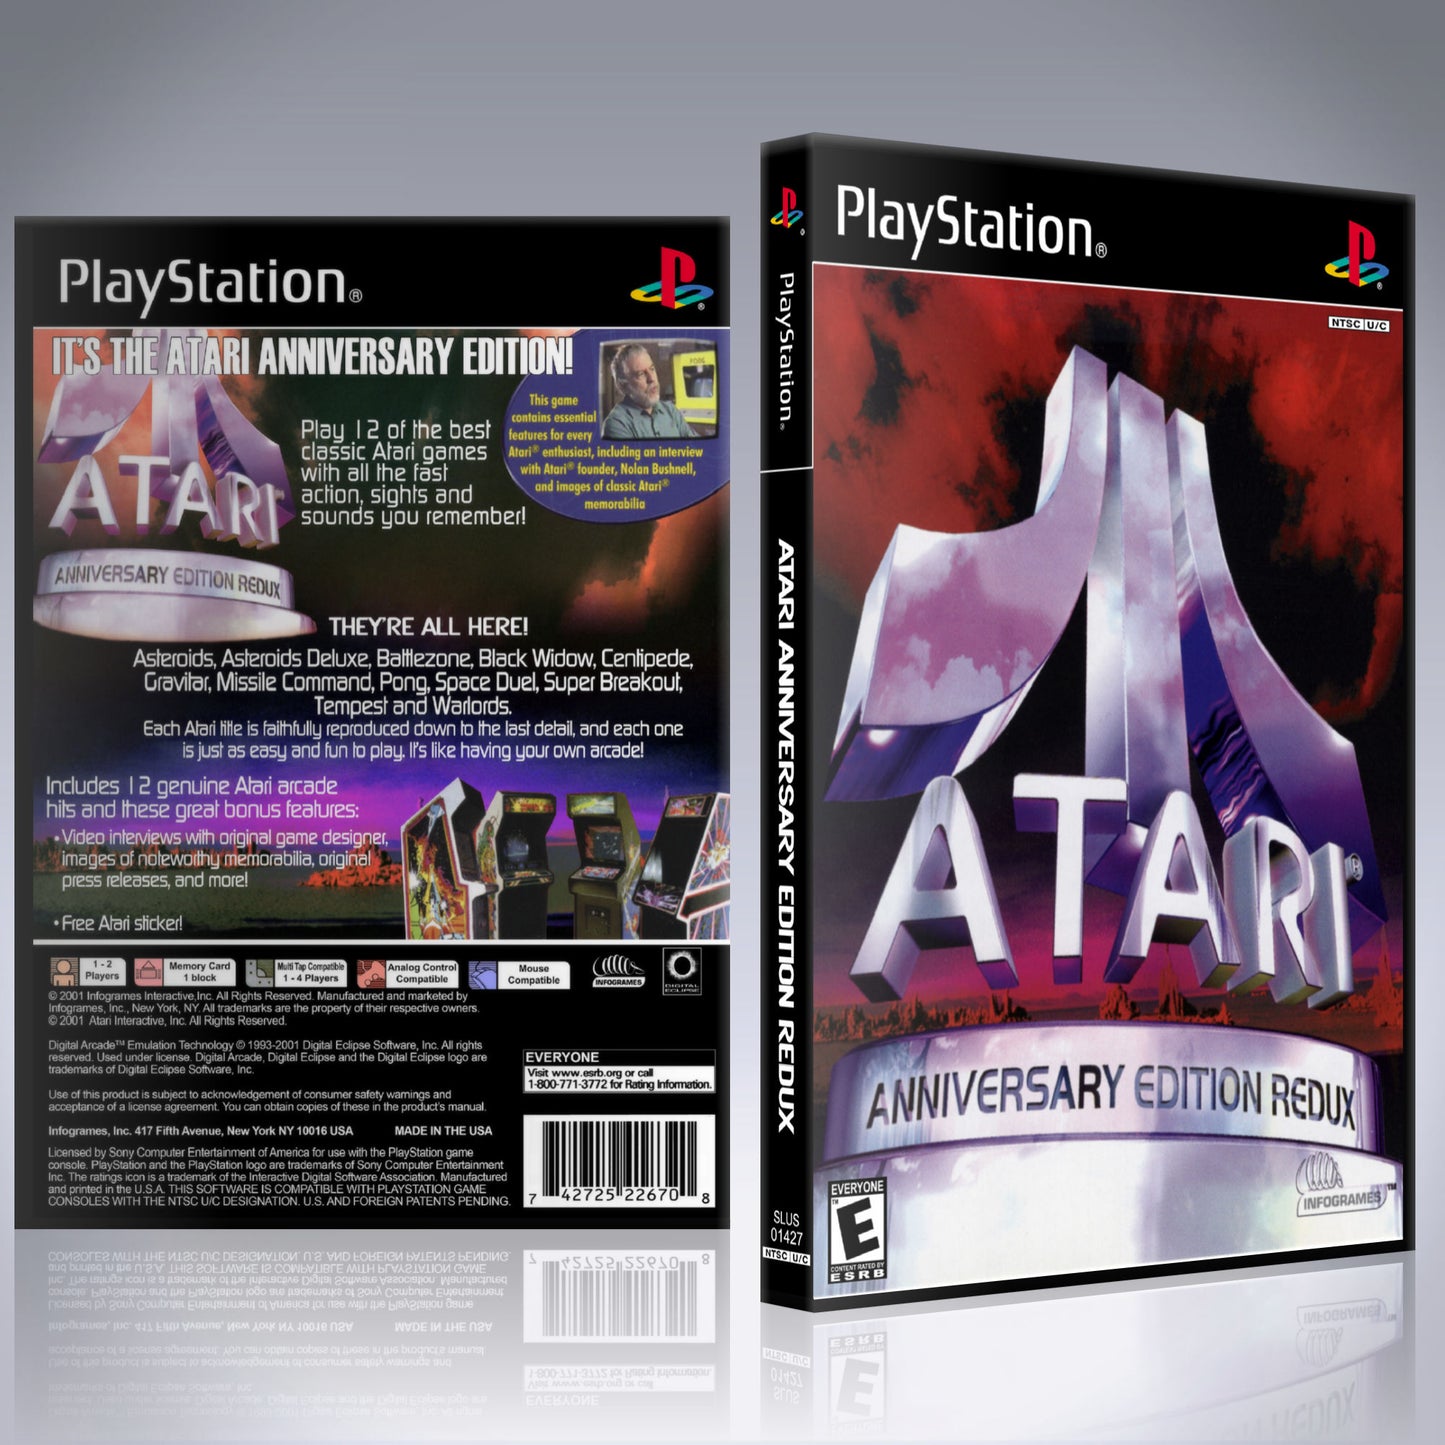 PS1 Case - NO GAME - Atari Anniversary Edition Redux